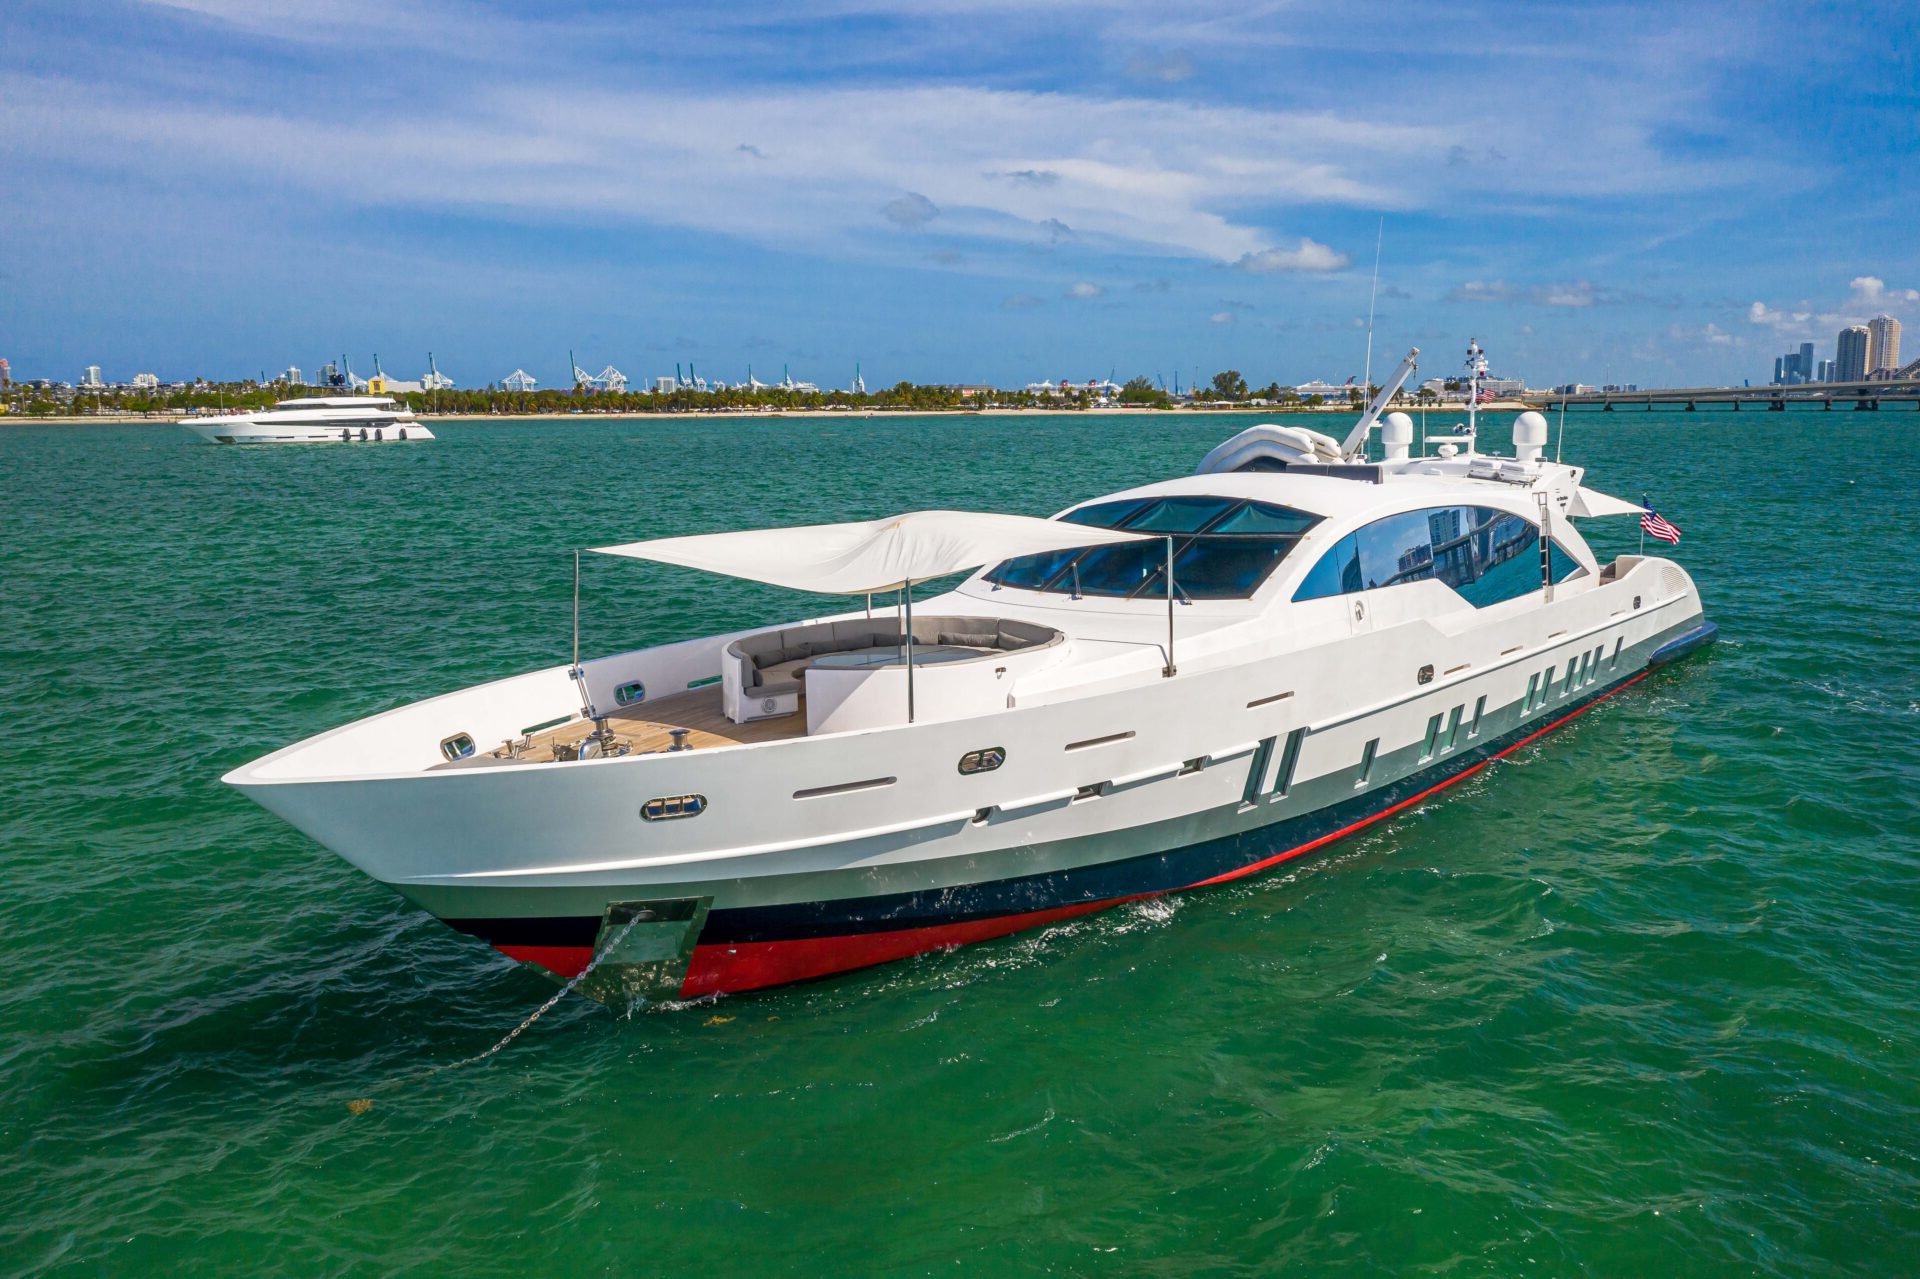 Rent a yacht 120 in Miami Beach